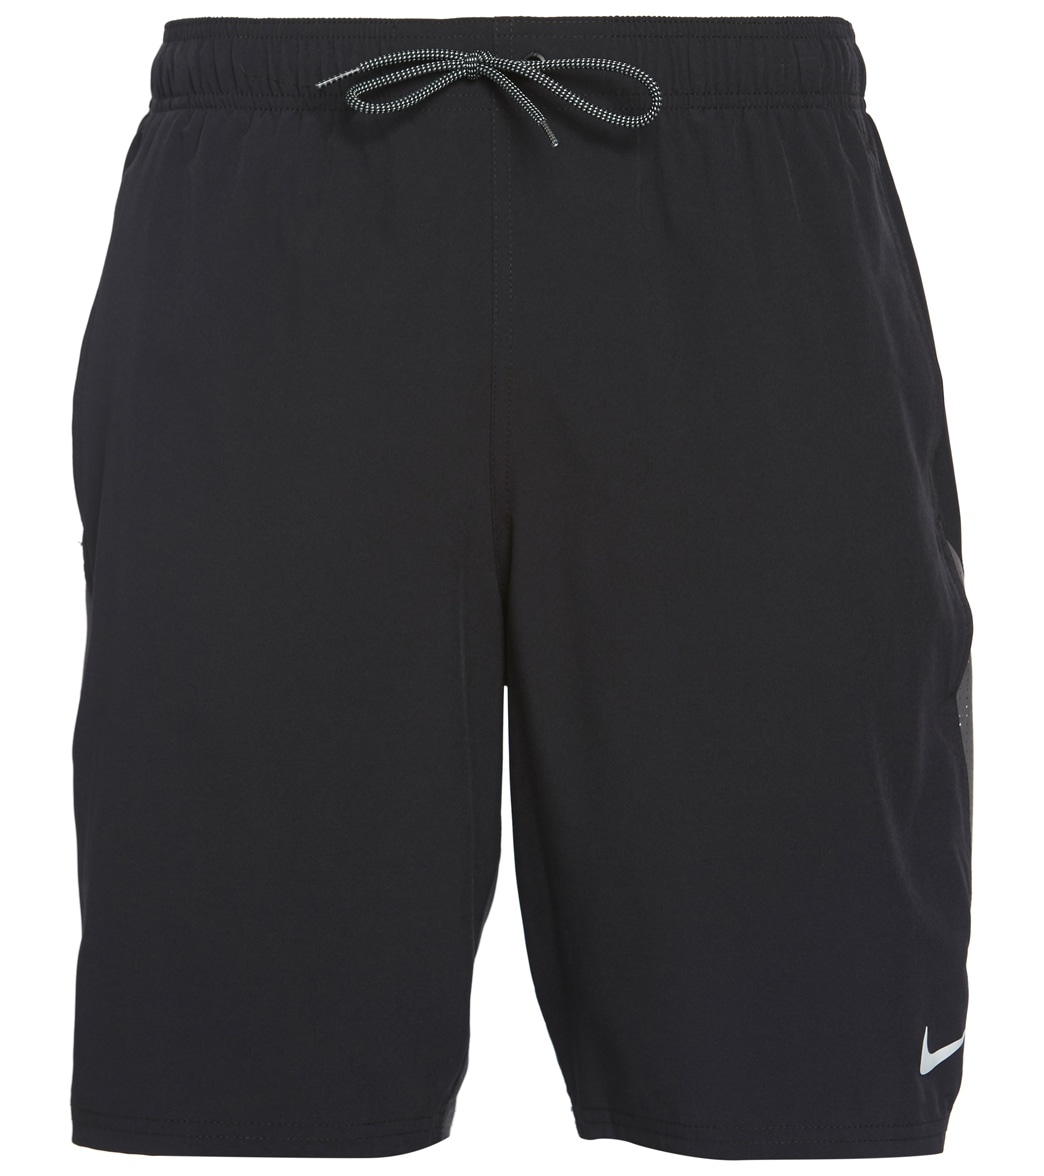 Nike Men's 20 Contend Volley Short - Black Xl Polyester - Swimoutlet.com